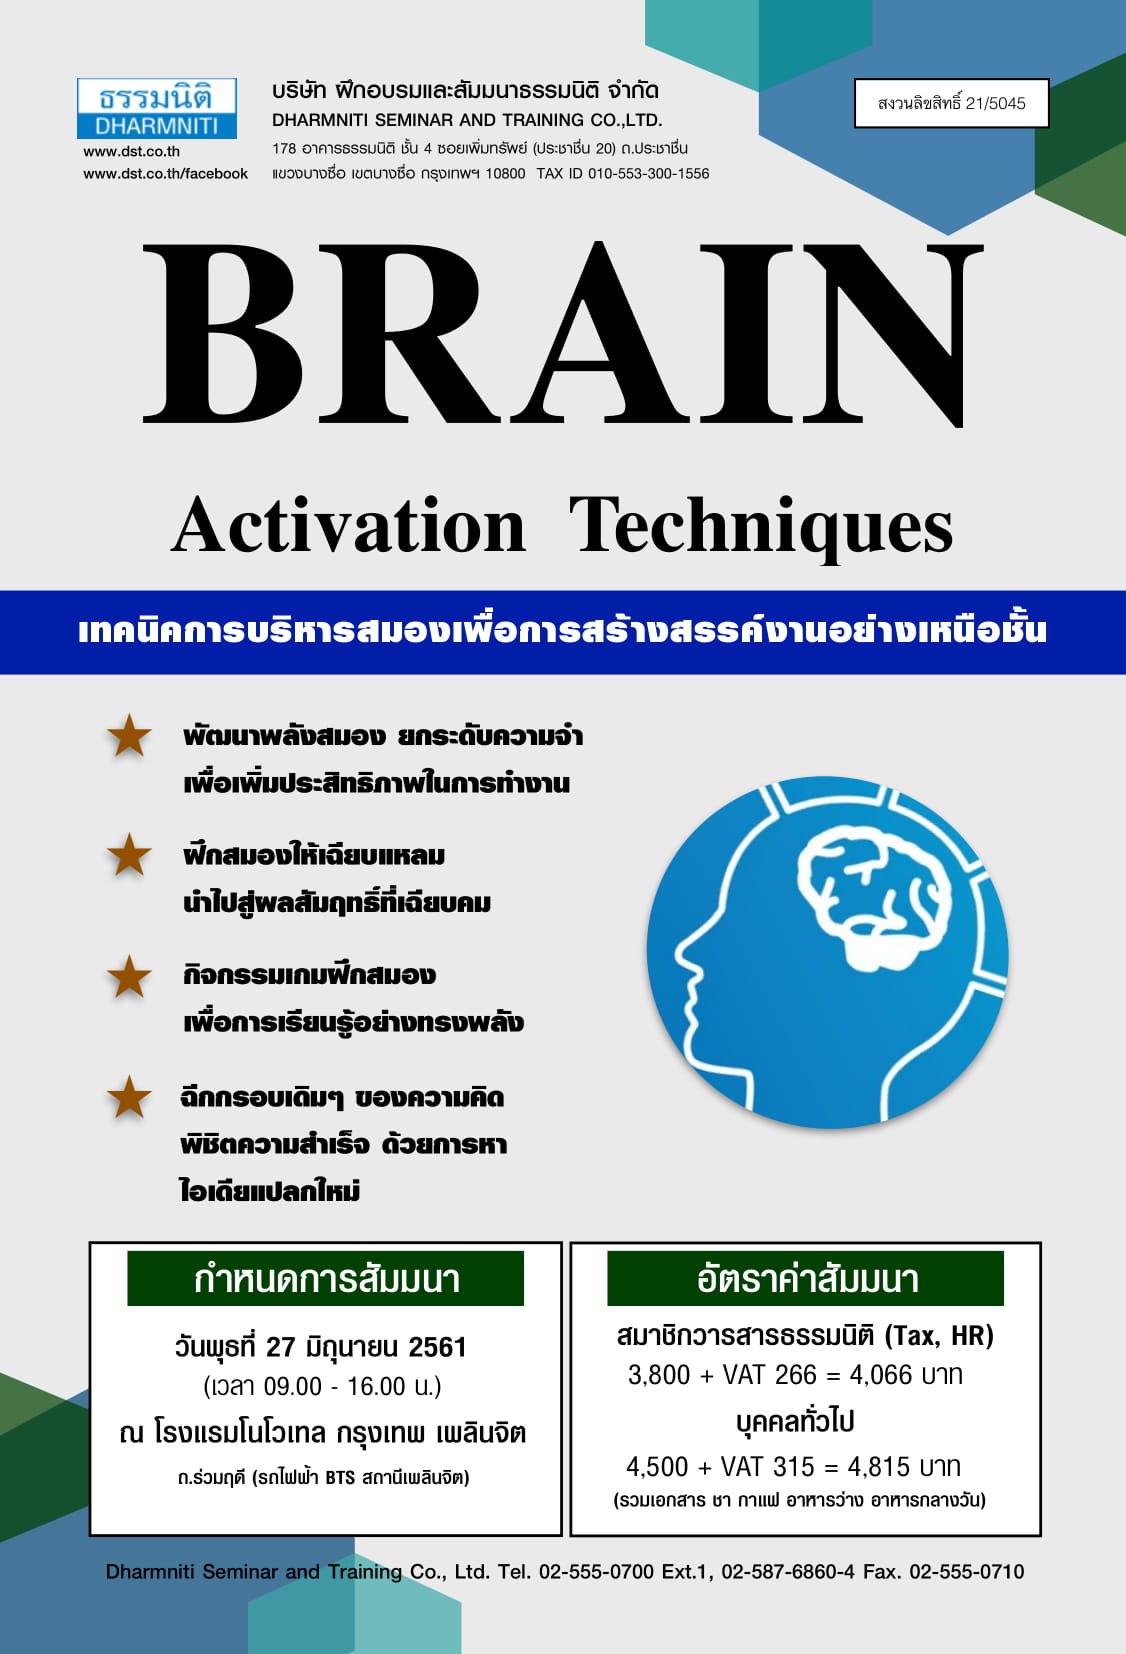 Brain Activation Techniques : เทคนิคการบริหารสมอง เพื่อการสร้างสรรค์งานอย่างเหนือชั้น 6/61